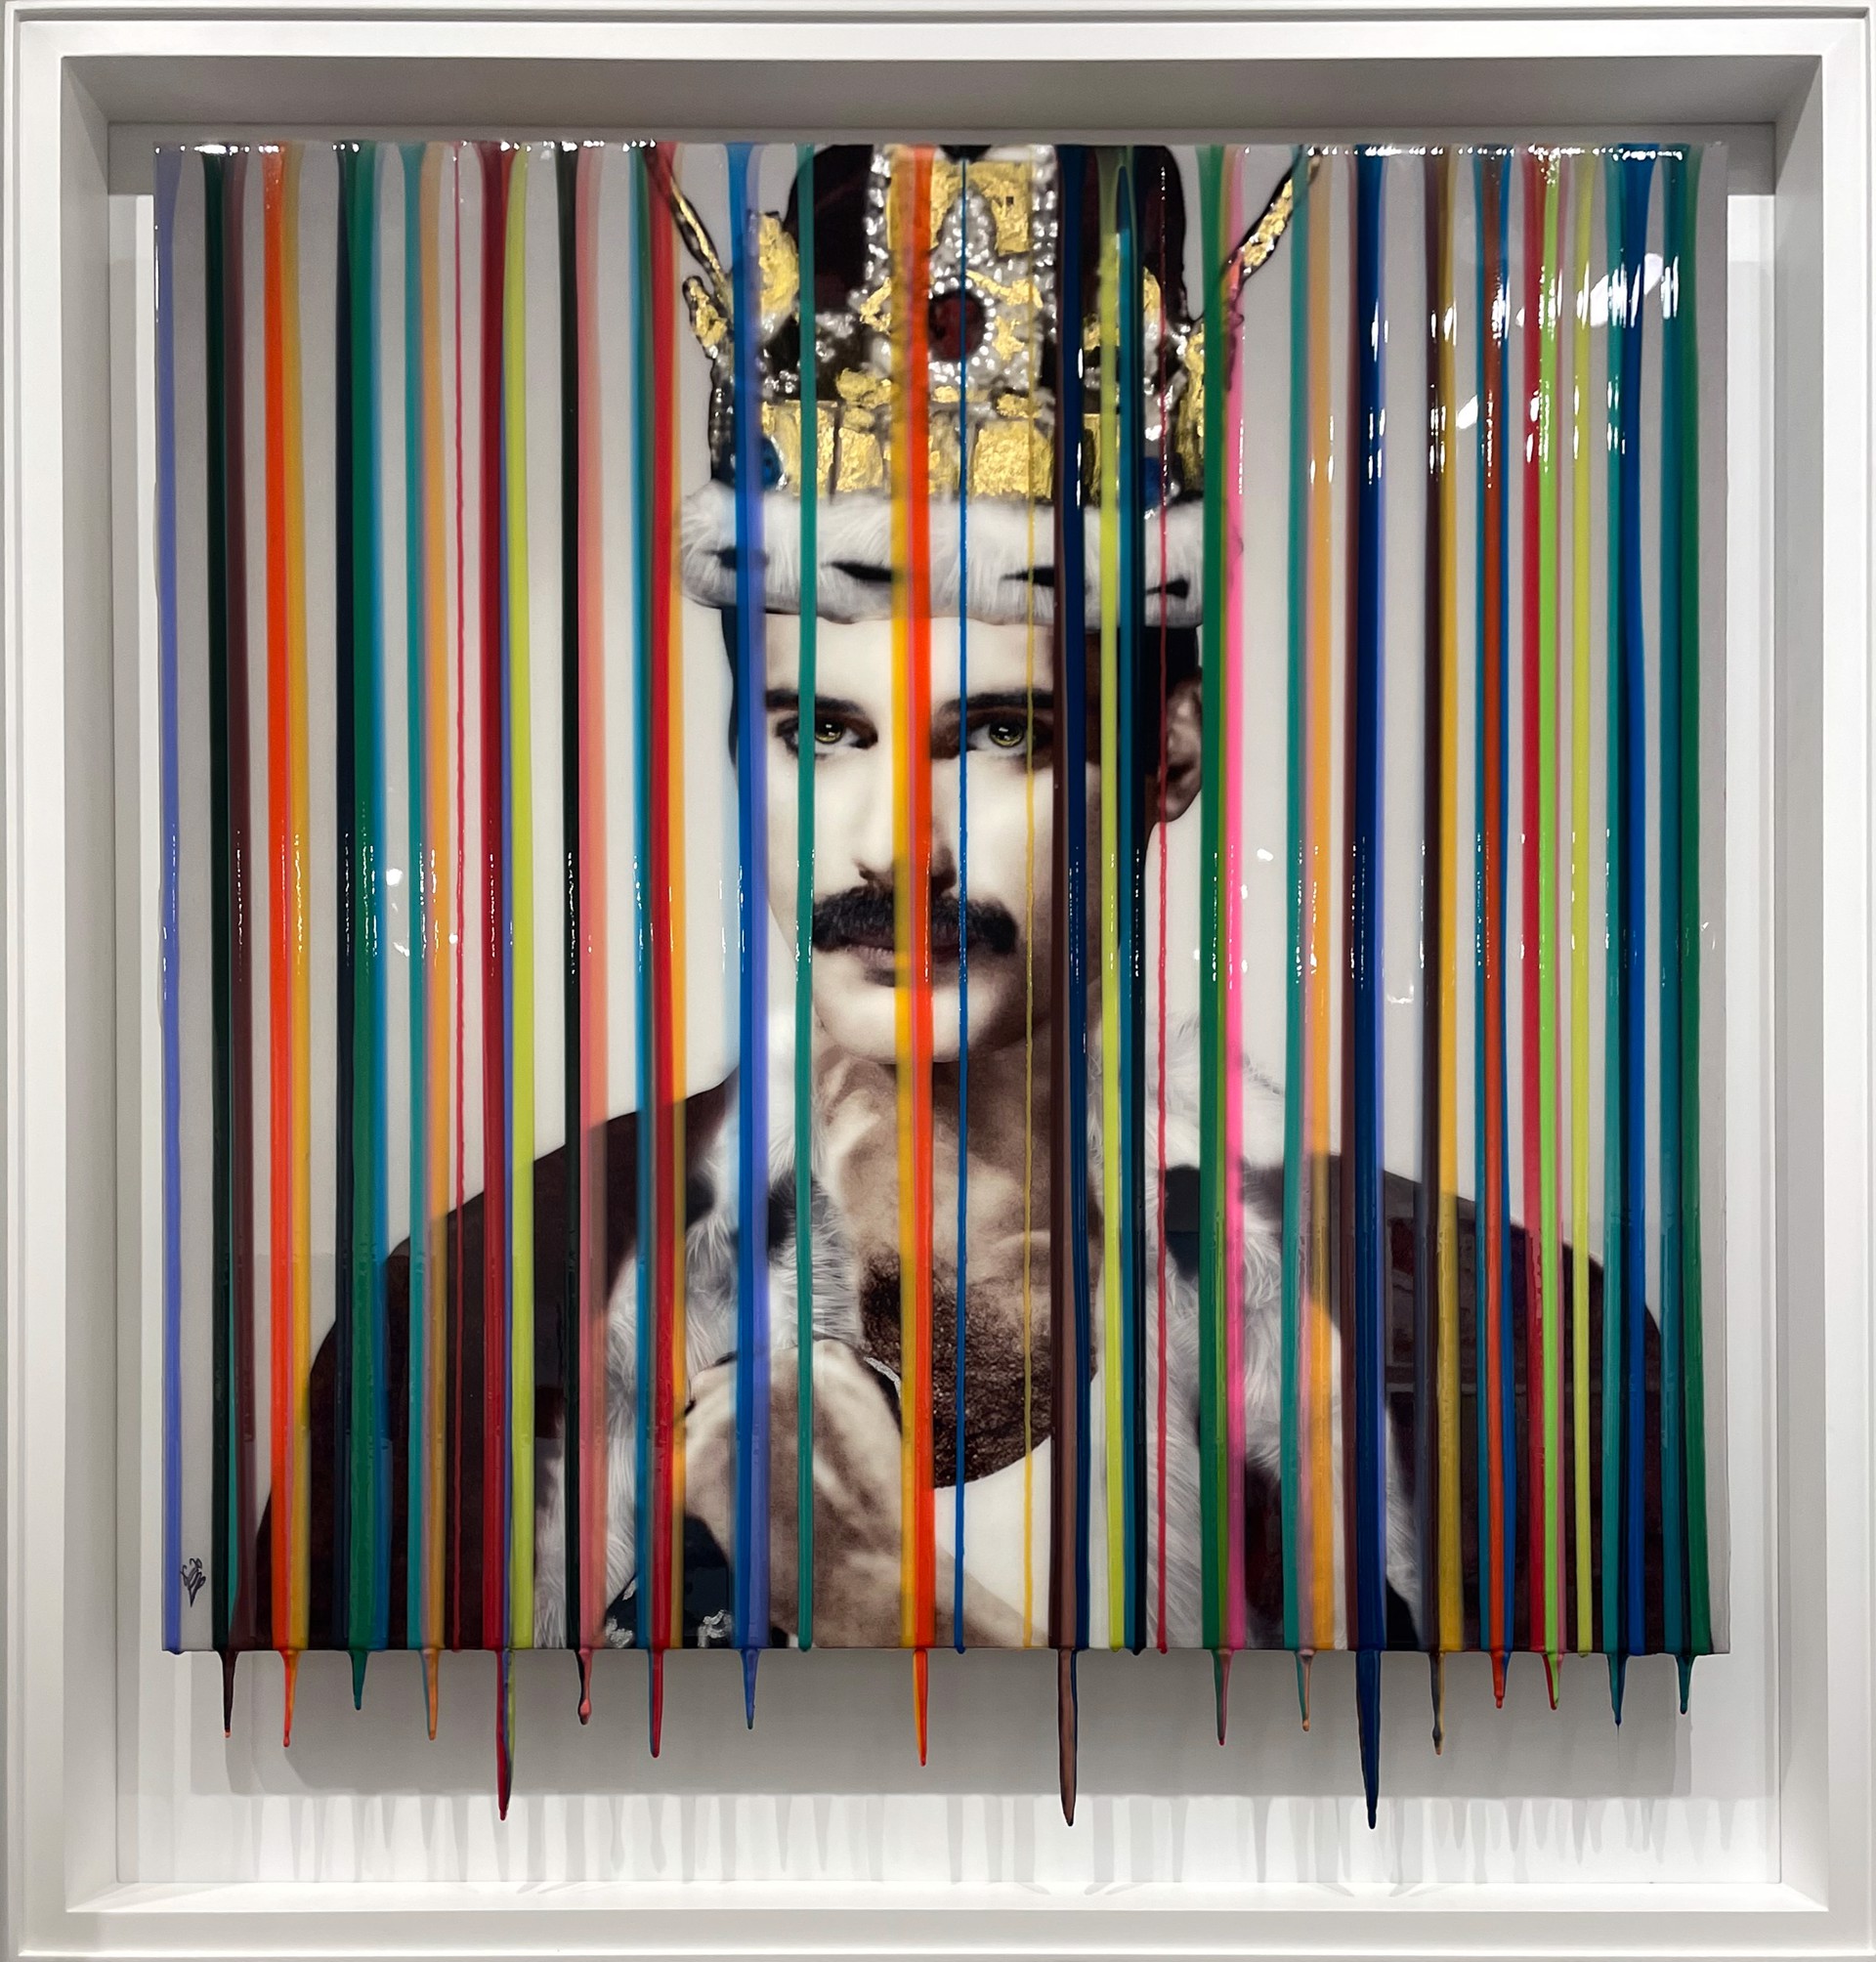 Freddie Queen by Srinjoy